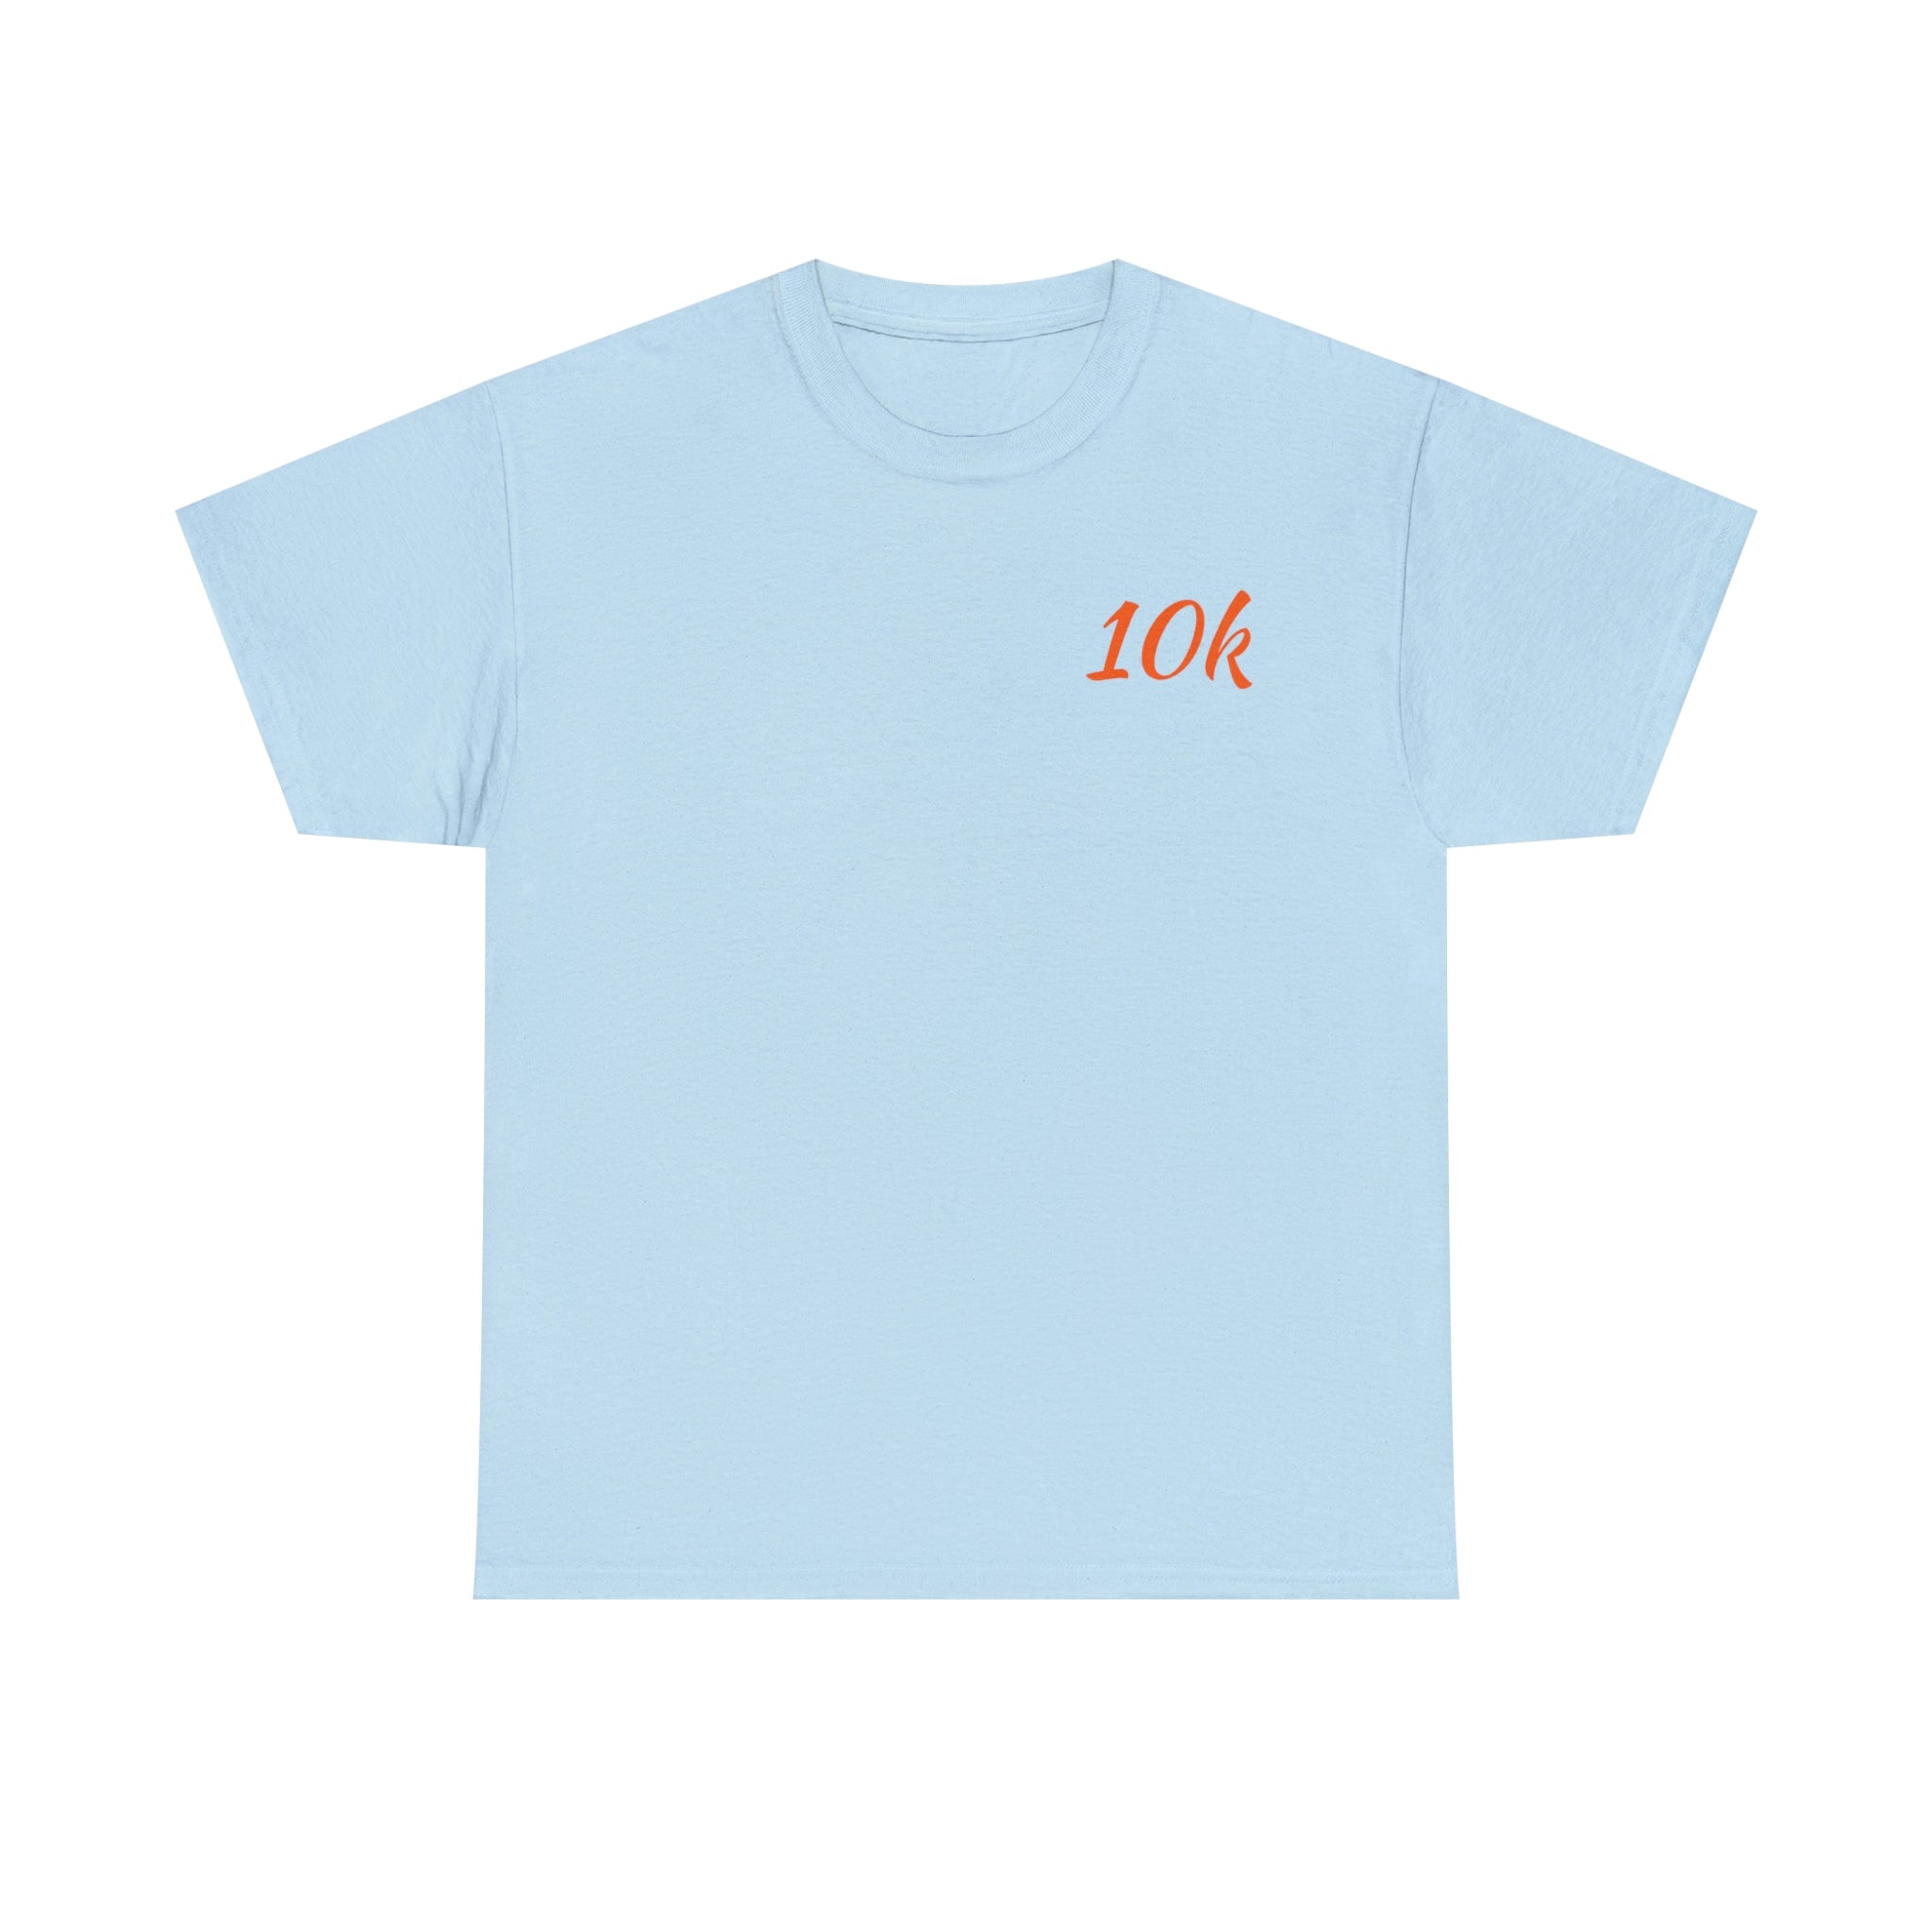 10k' Mo Money Mo Problems men's T-shirt